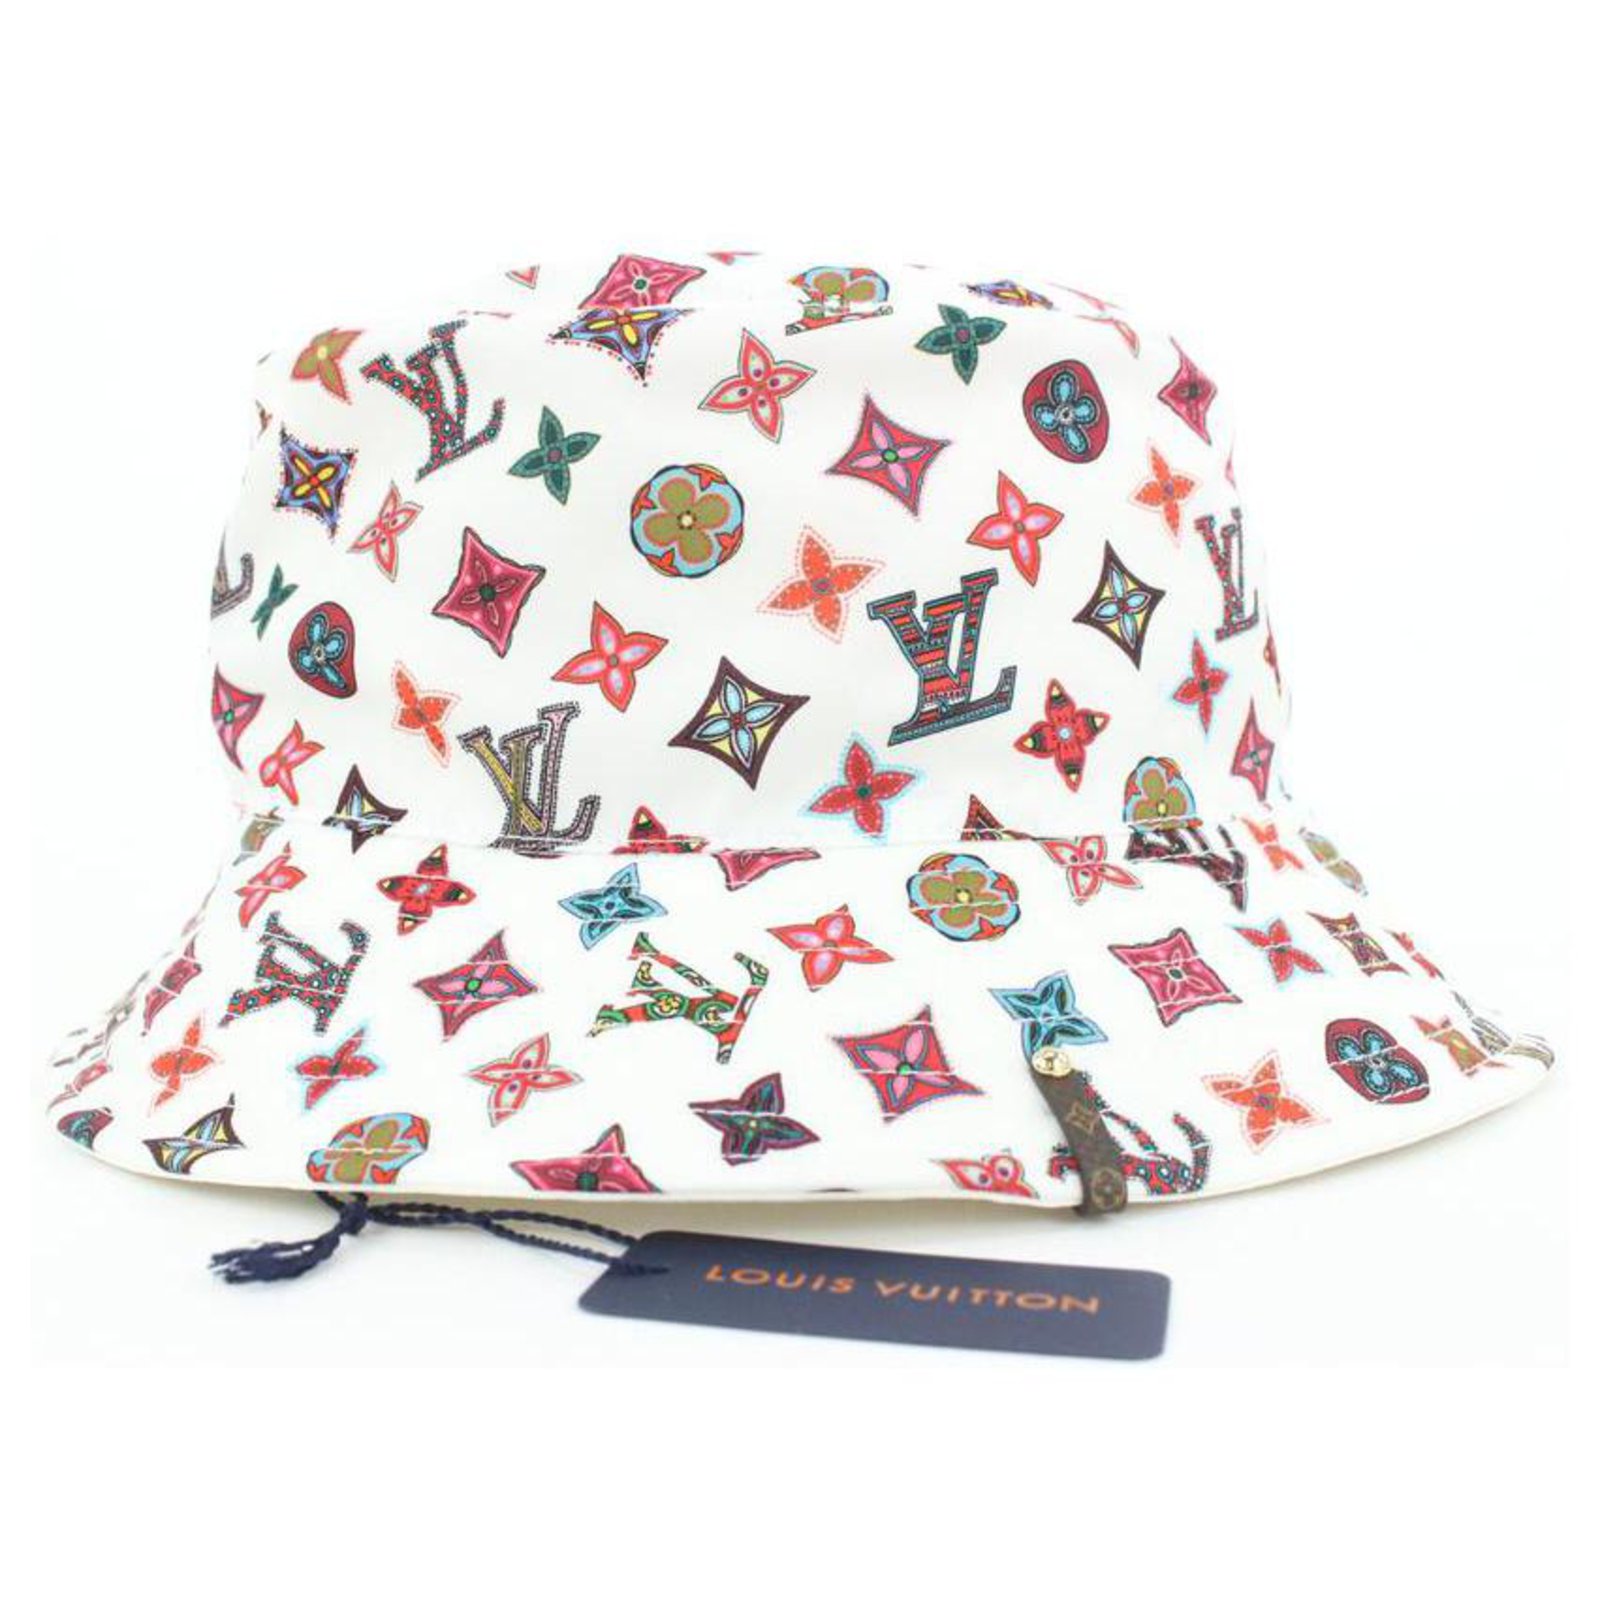 Louis Vuitton Rope Bucket Hat - Grey Hats, Accessories - LOU335229